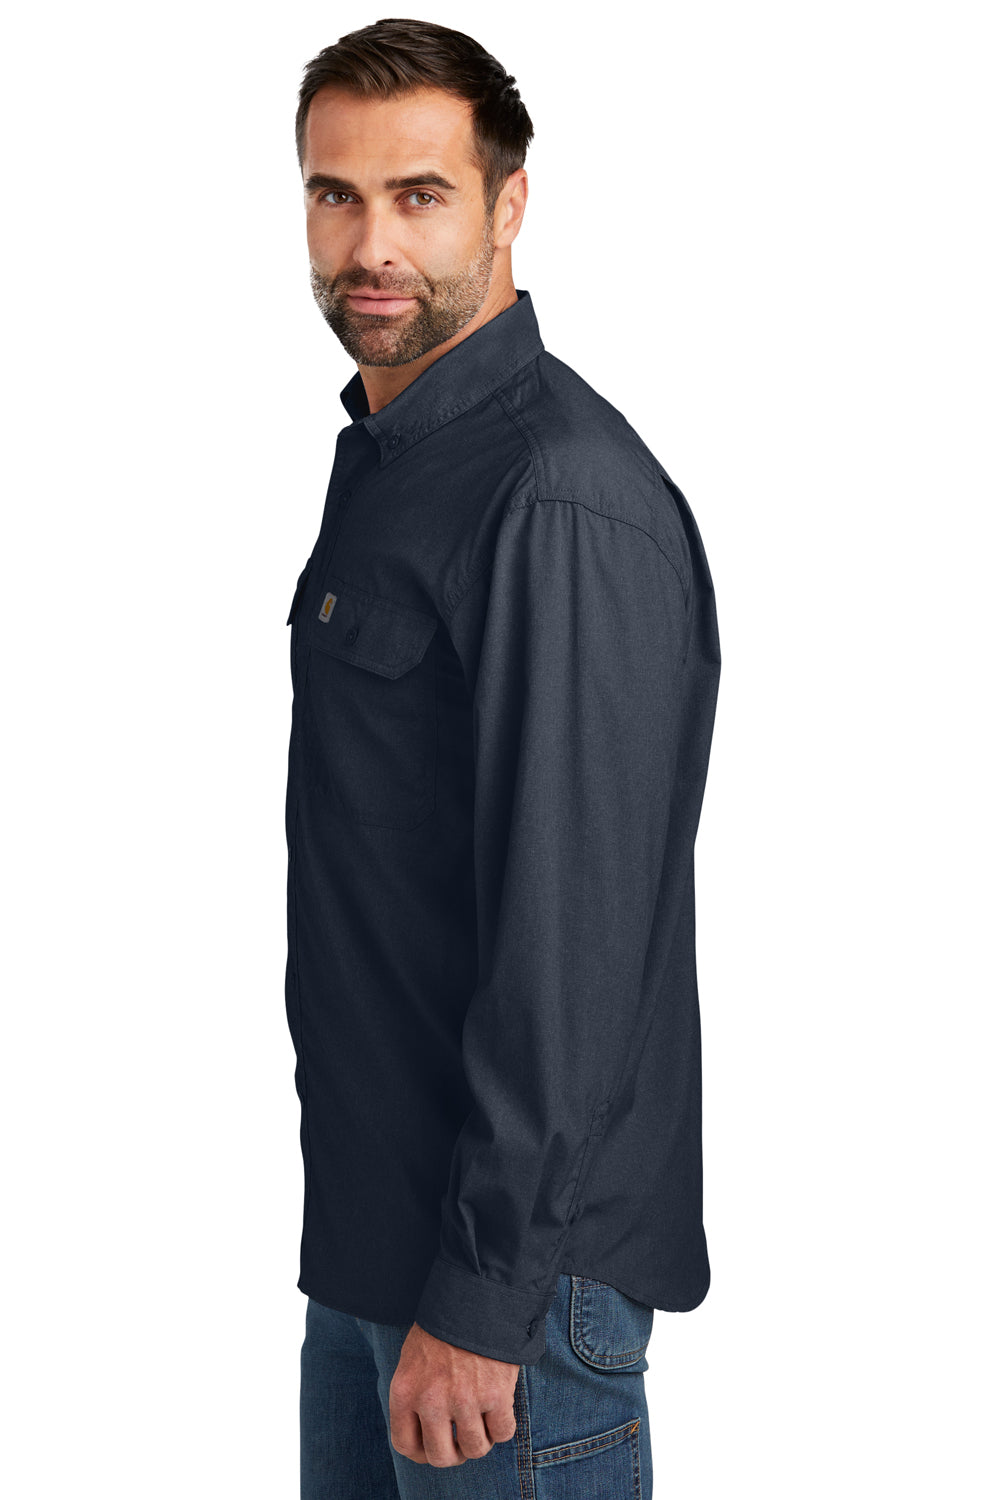 Carhartt CT105291 Mens Force Moisture Wicking Long Sleeve Button Down Shirt w/ Double Pockets Navy Blue Model Side